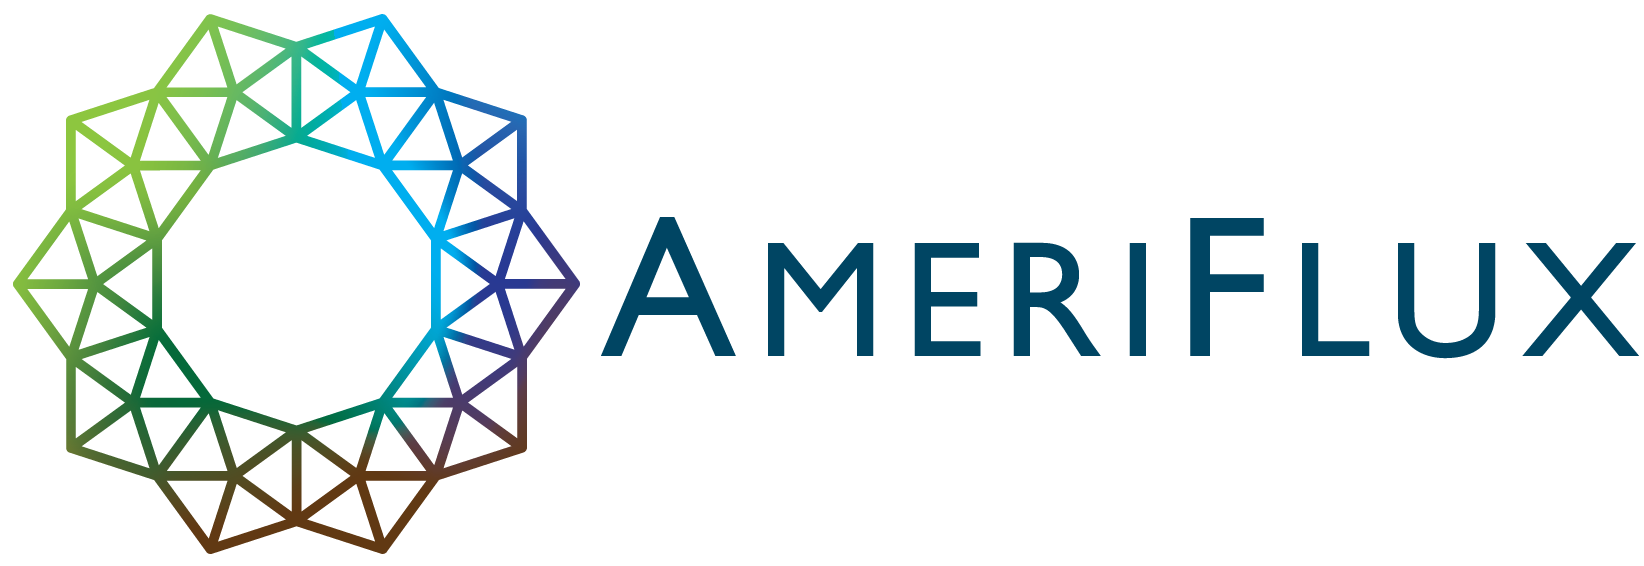 Ameriflux logo